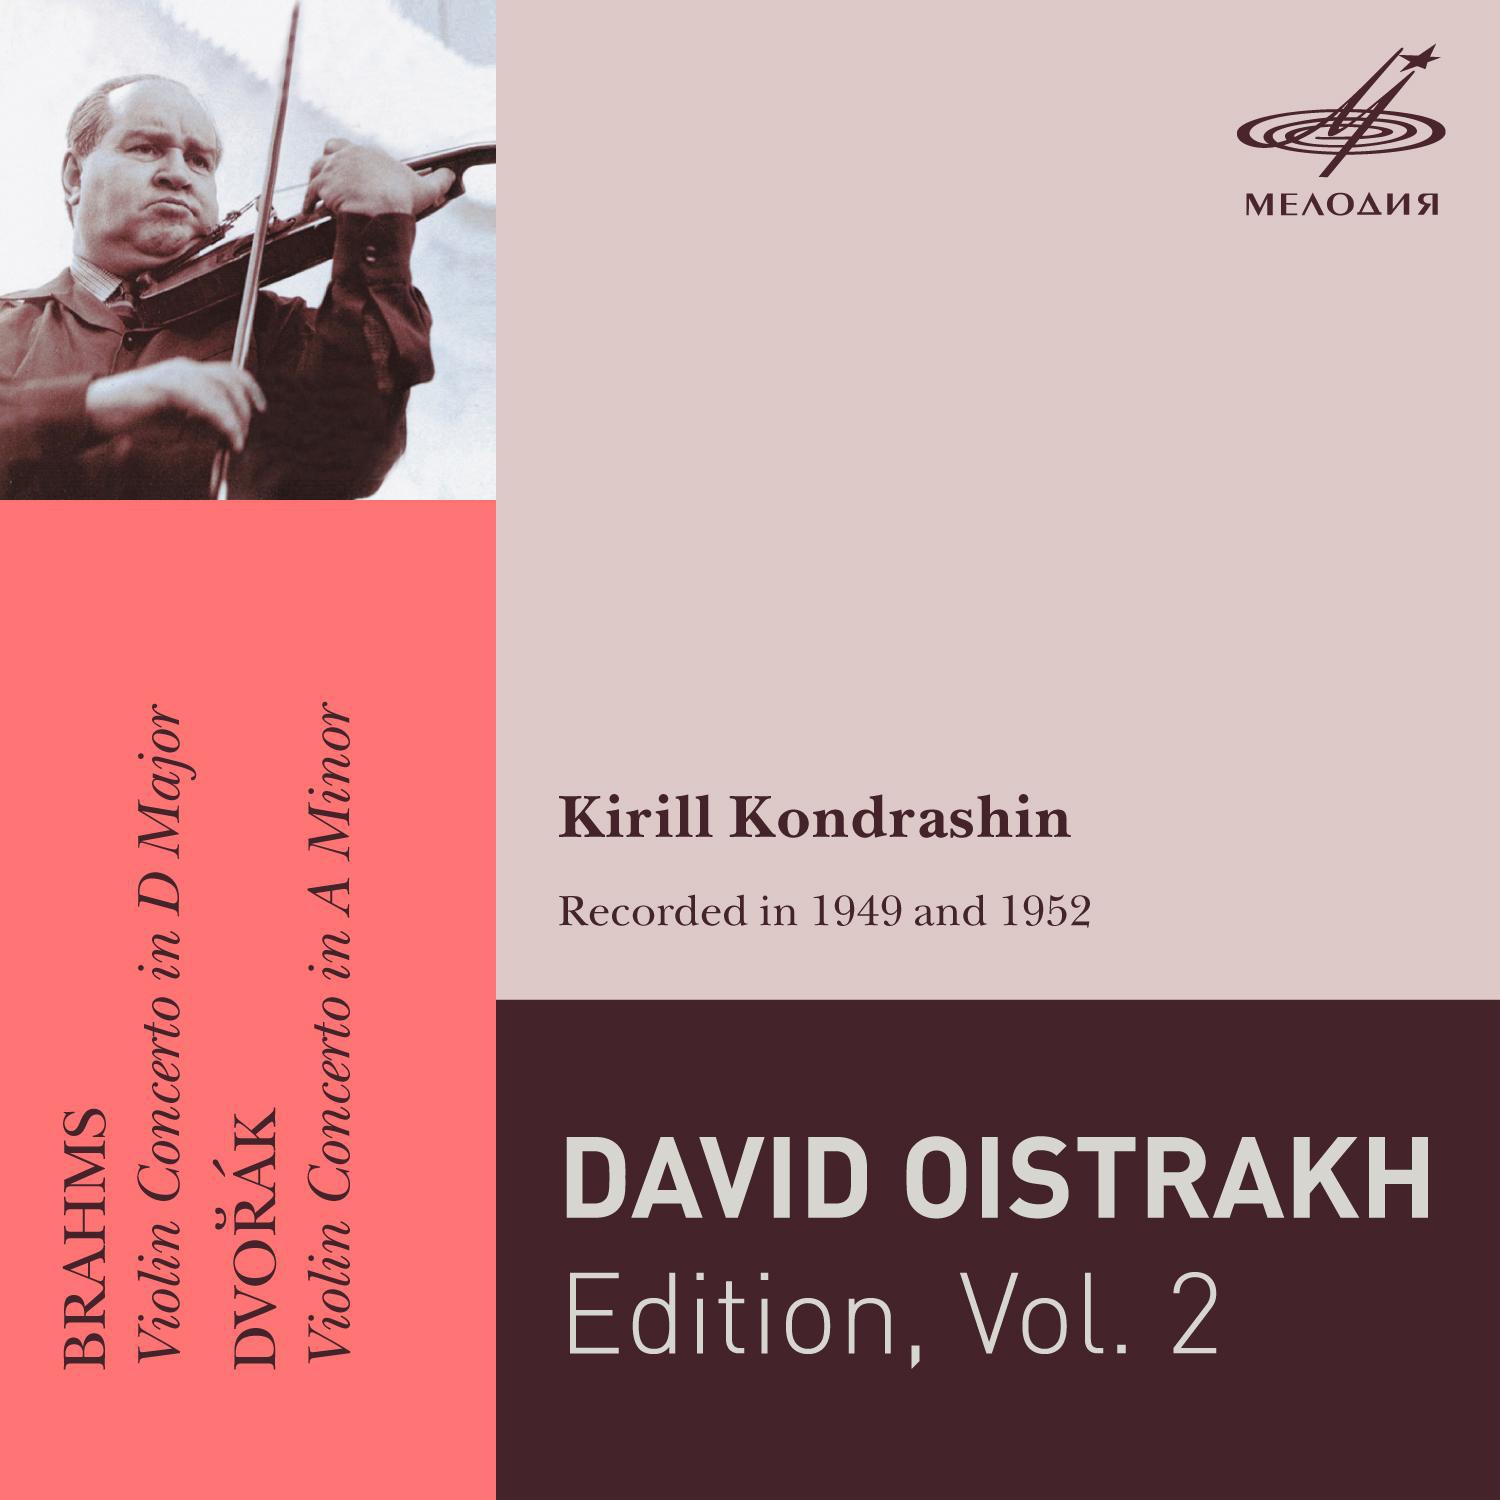 David Oistrakh Edition, Vol. 2